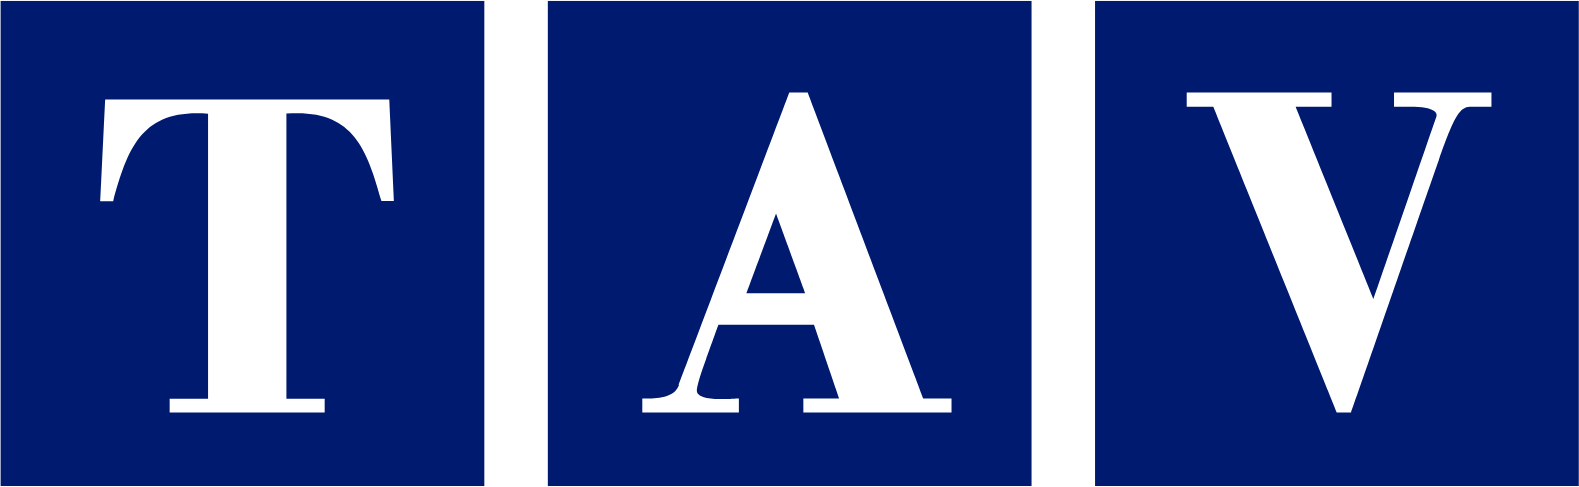 TAV Airports Holding logo (PNG transparent)